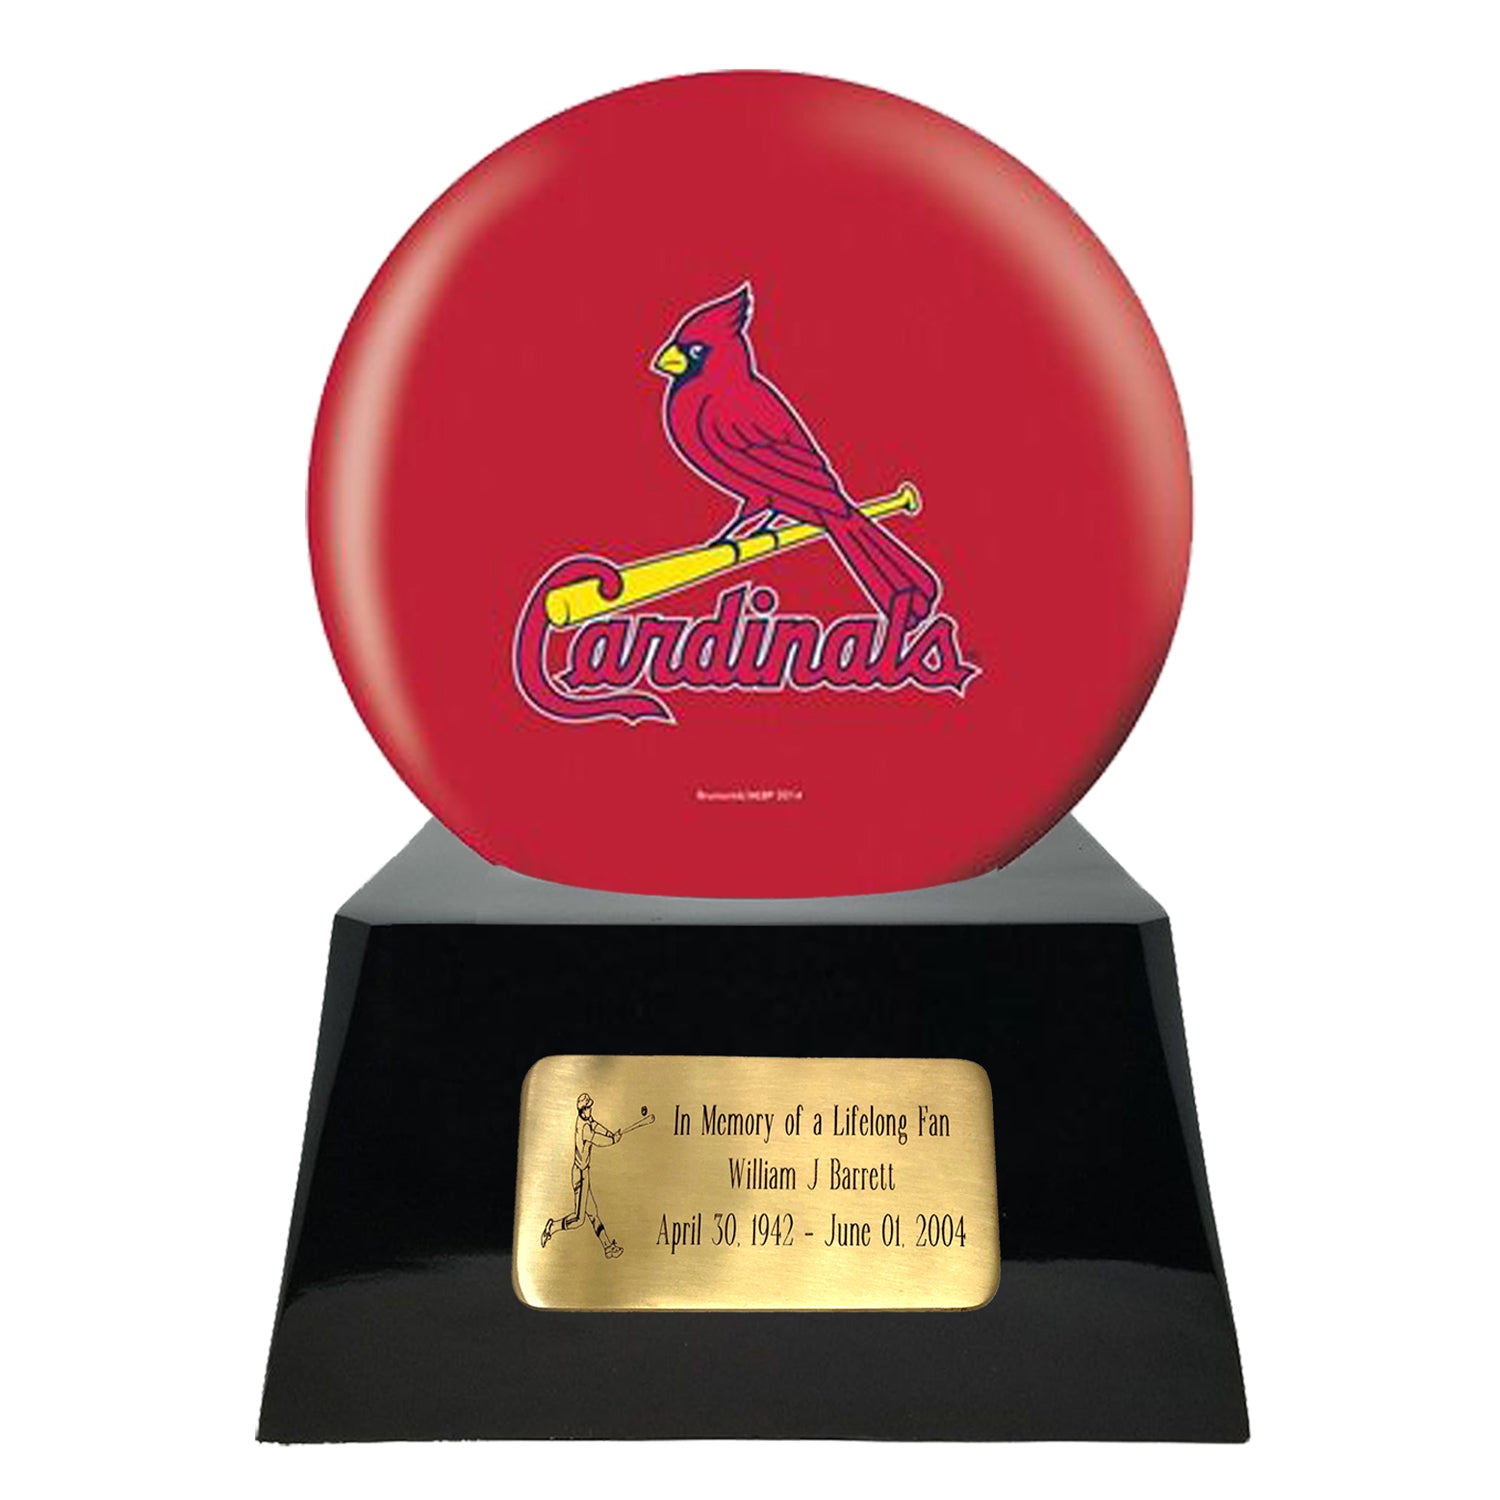 st louis cardinals baseball keychain